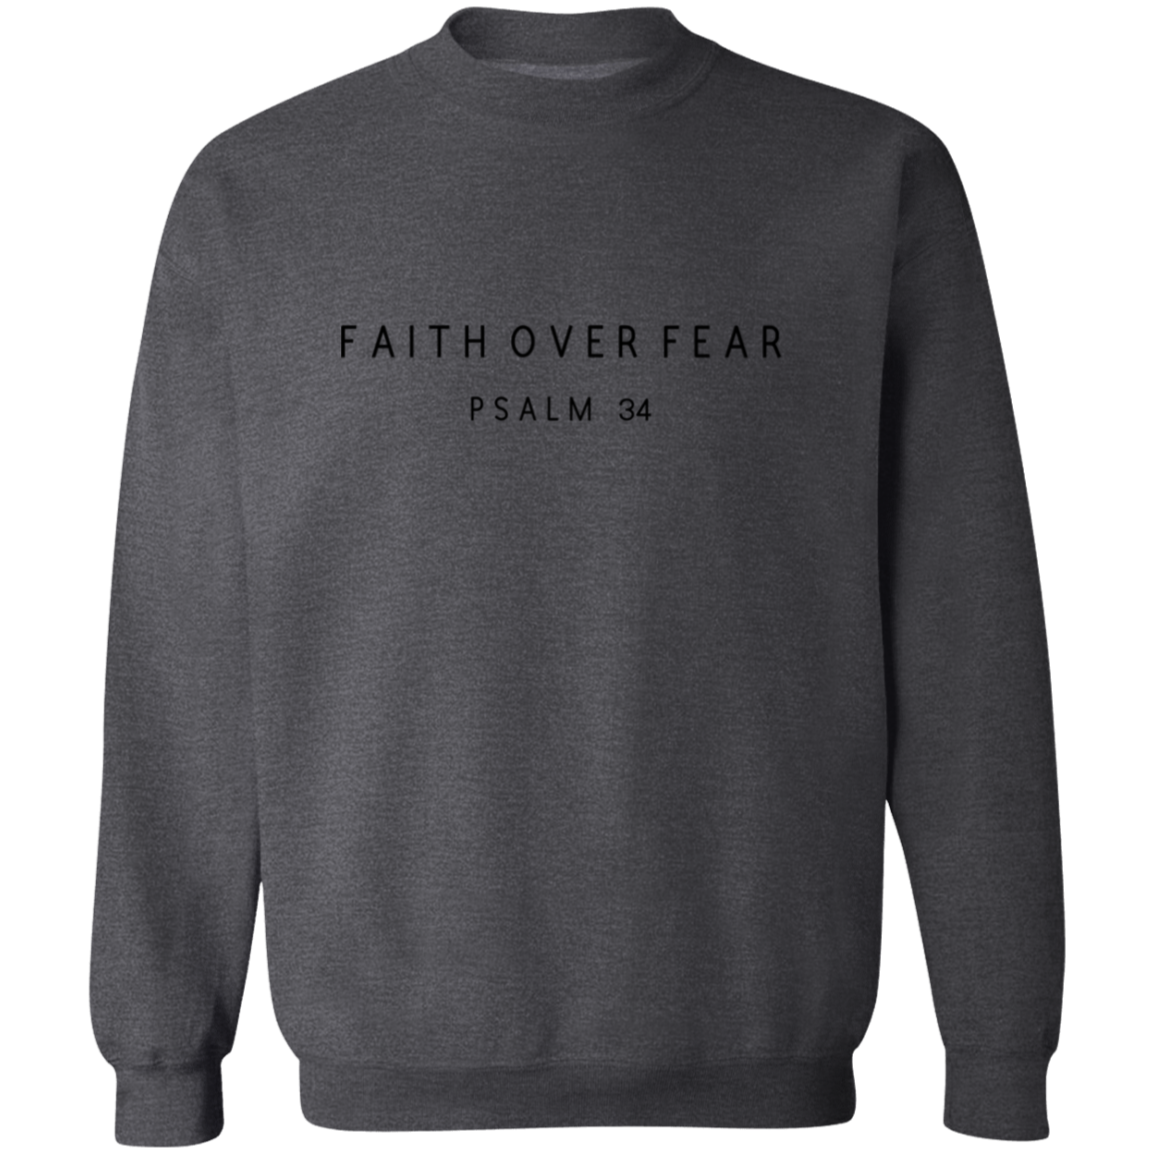 FAITH OVER FEAR Sweatshirt, Christian Sweatshirt, Scripture Sweatshirt, faith sweater